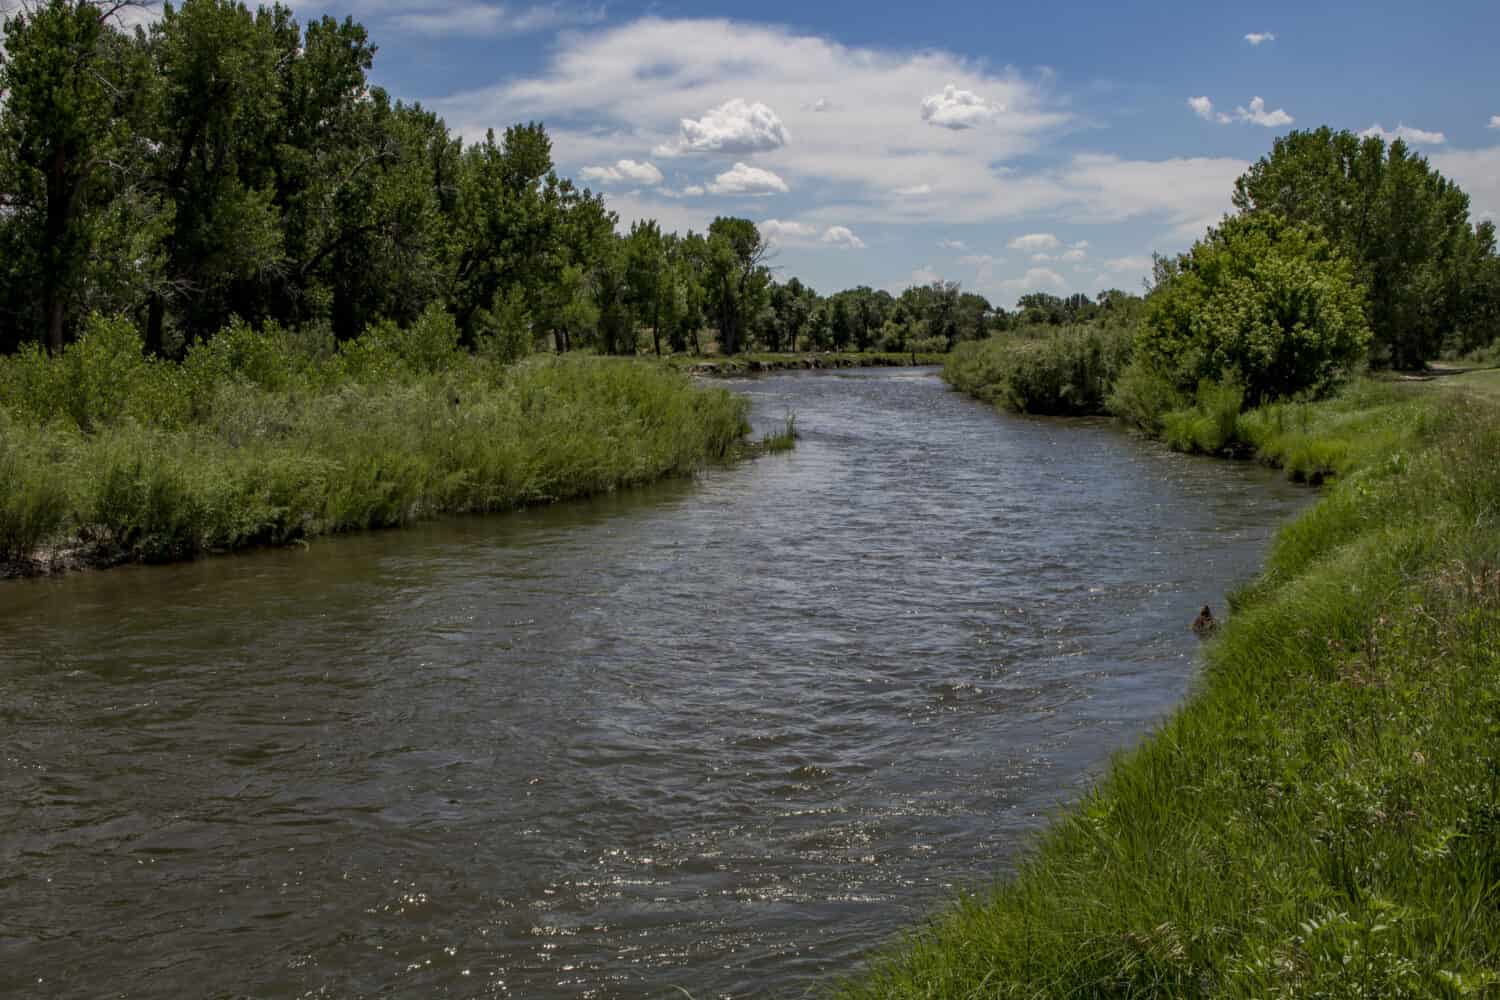 The Laramie River